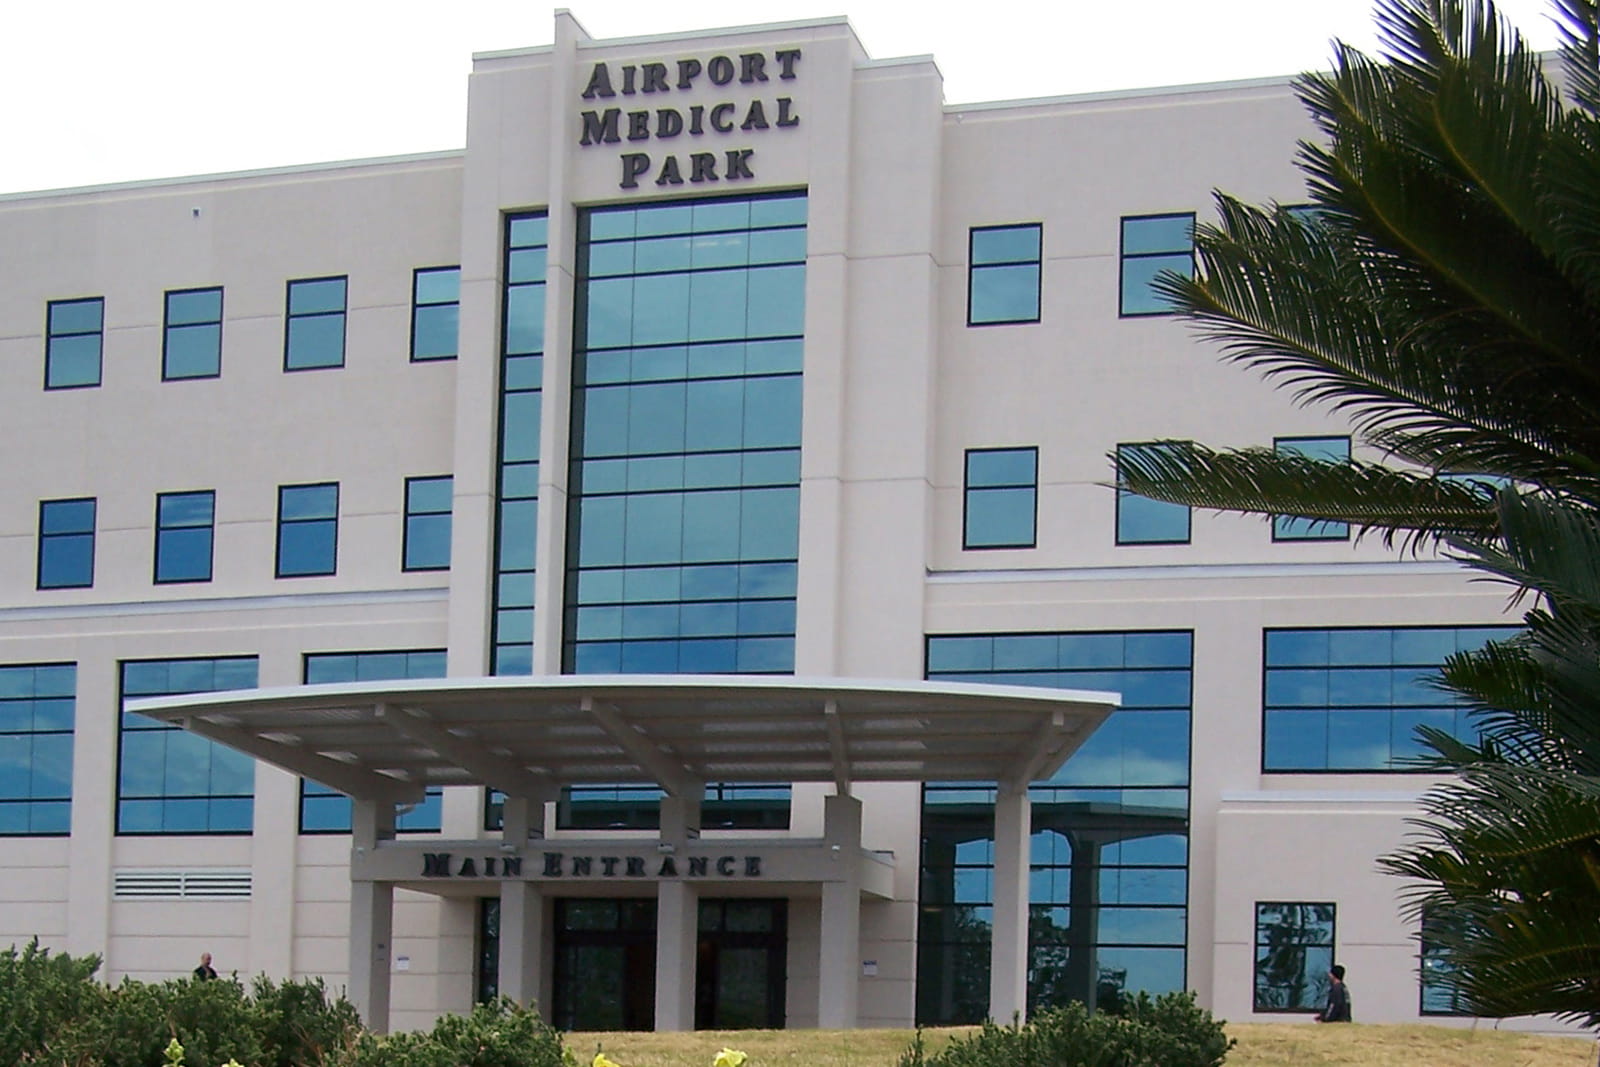 Lab Express - Ascension Sacred Heart Medical Park at Airport Blvd.